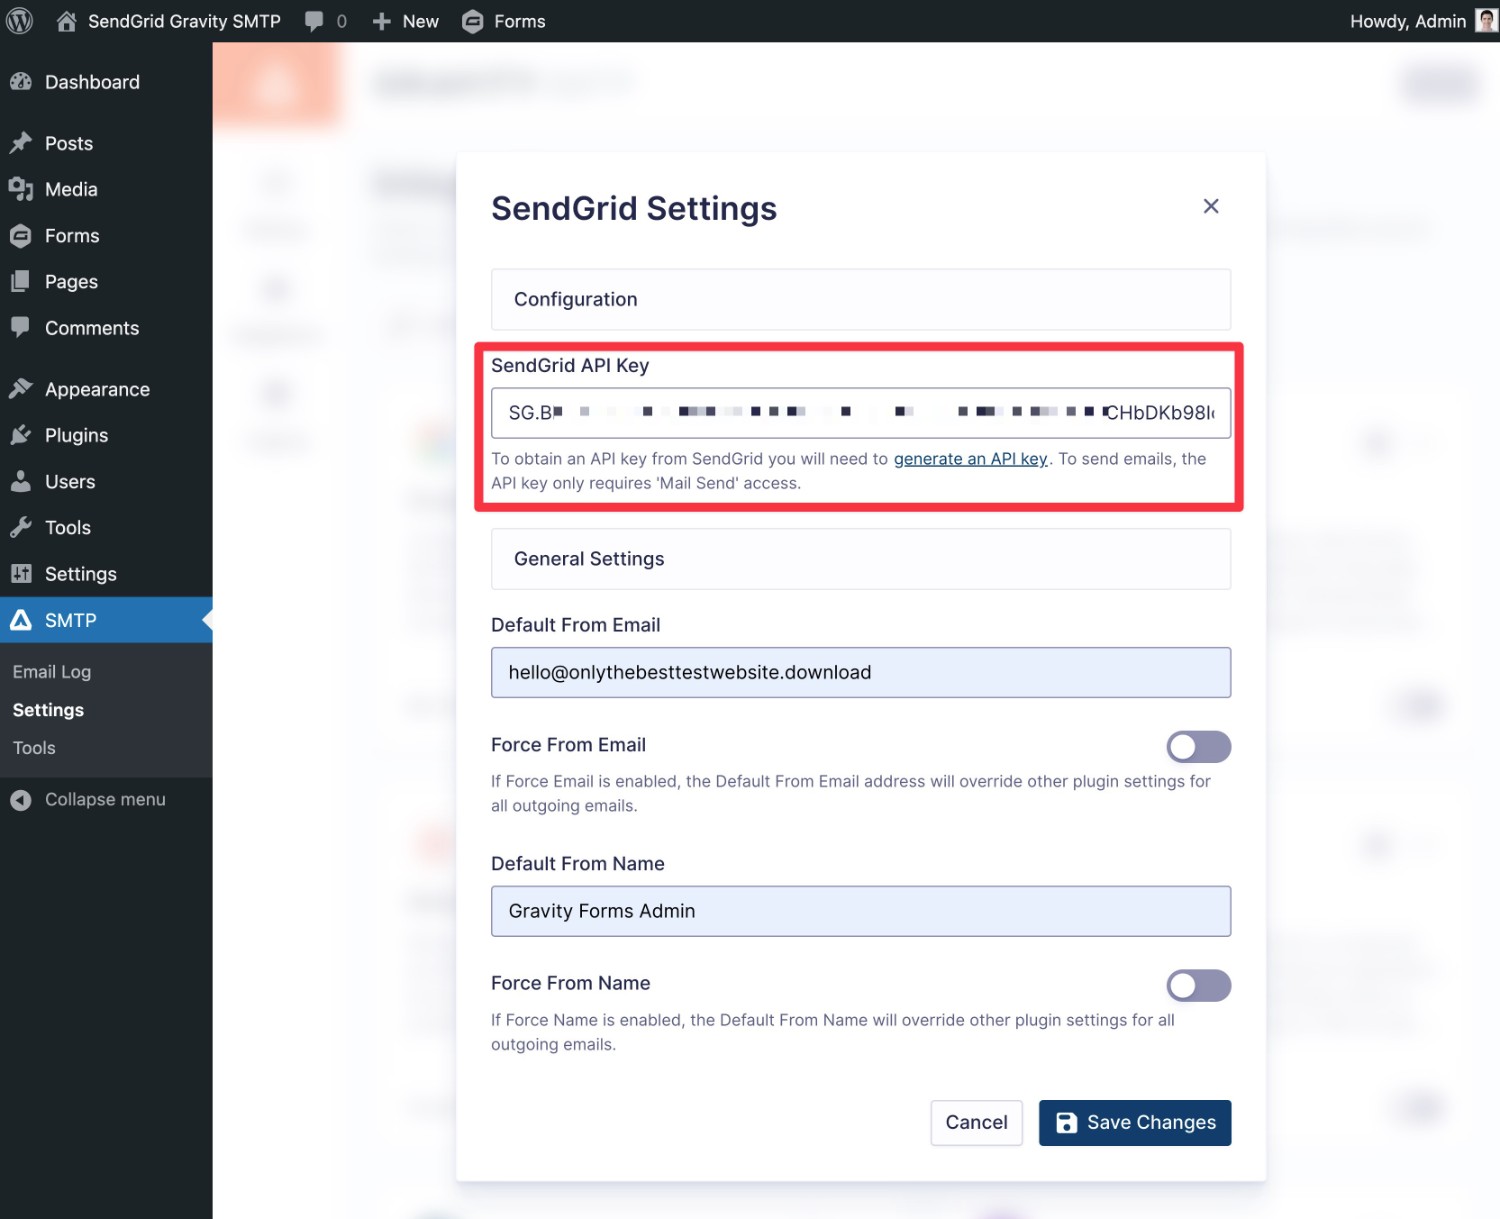 How to configure the SendGrid settings